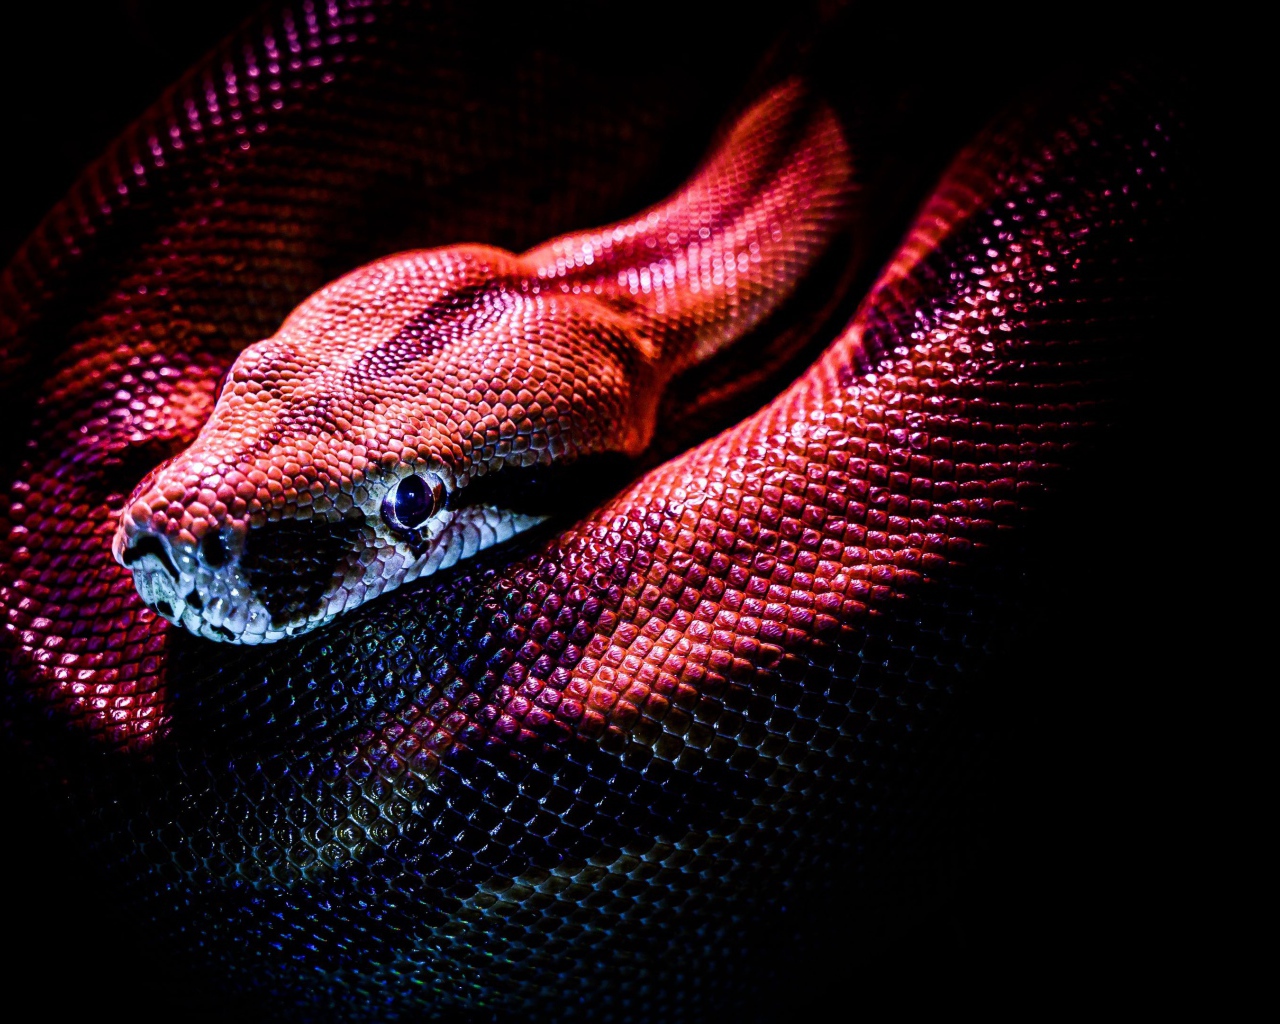 Red snake on a black background